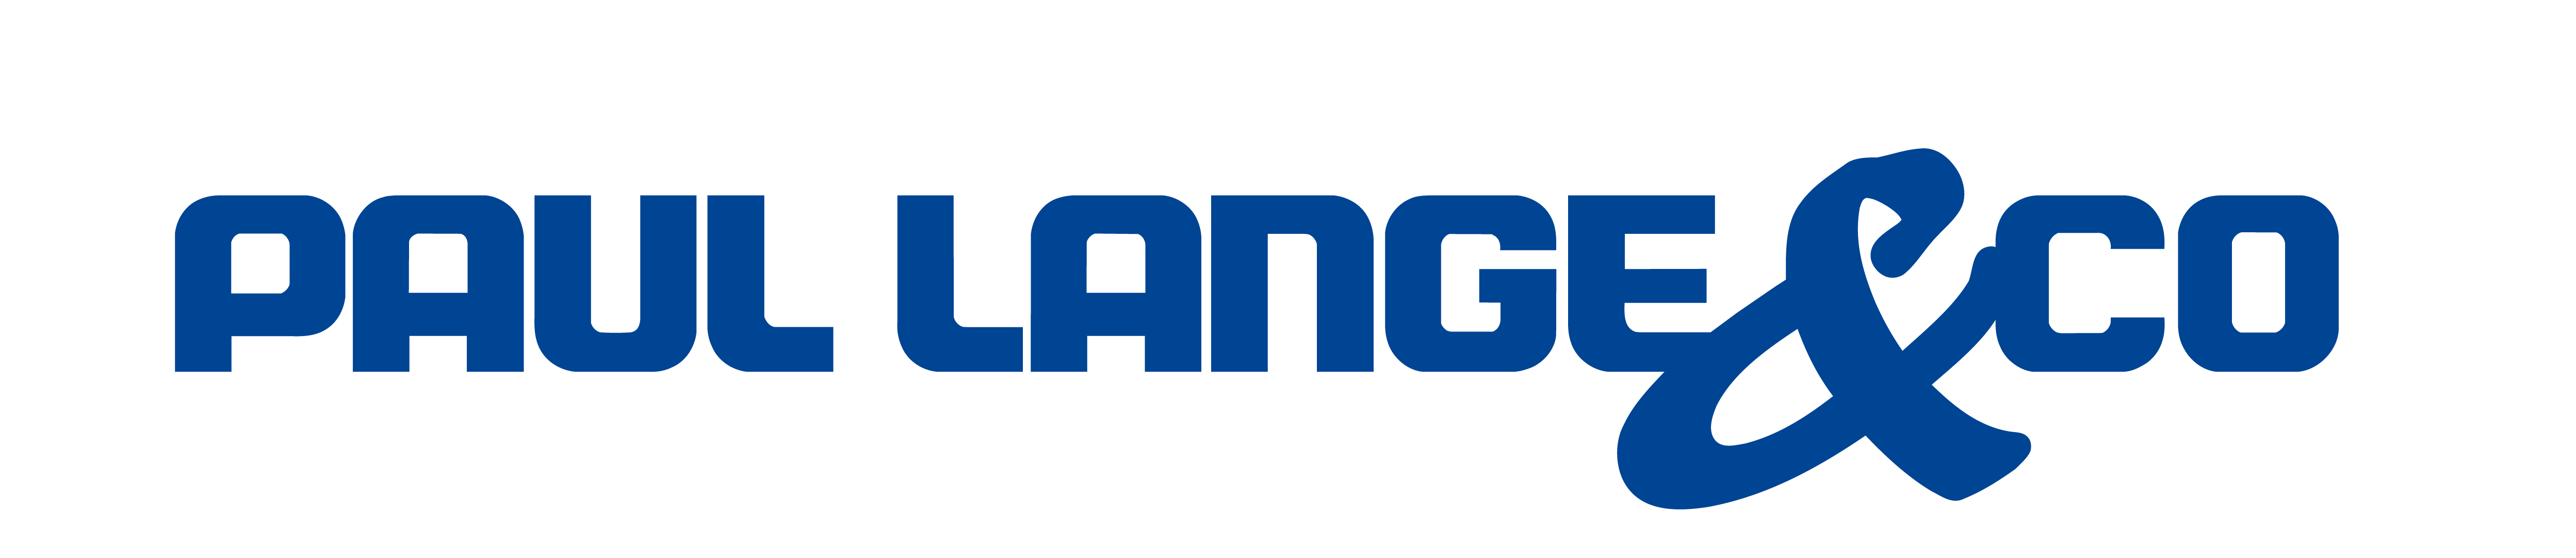 logo PLCO bikeparts and more wortmarke blue